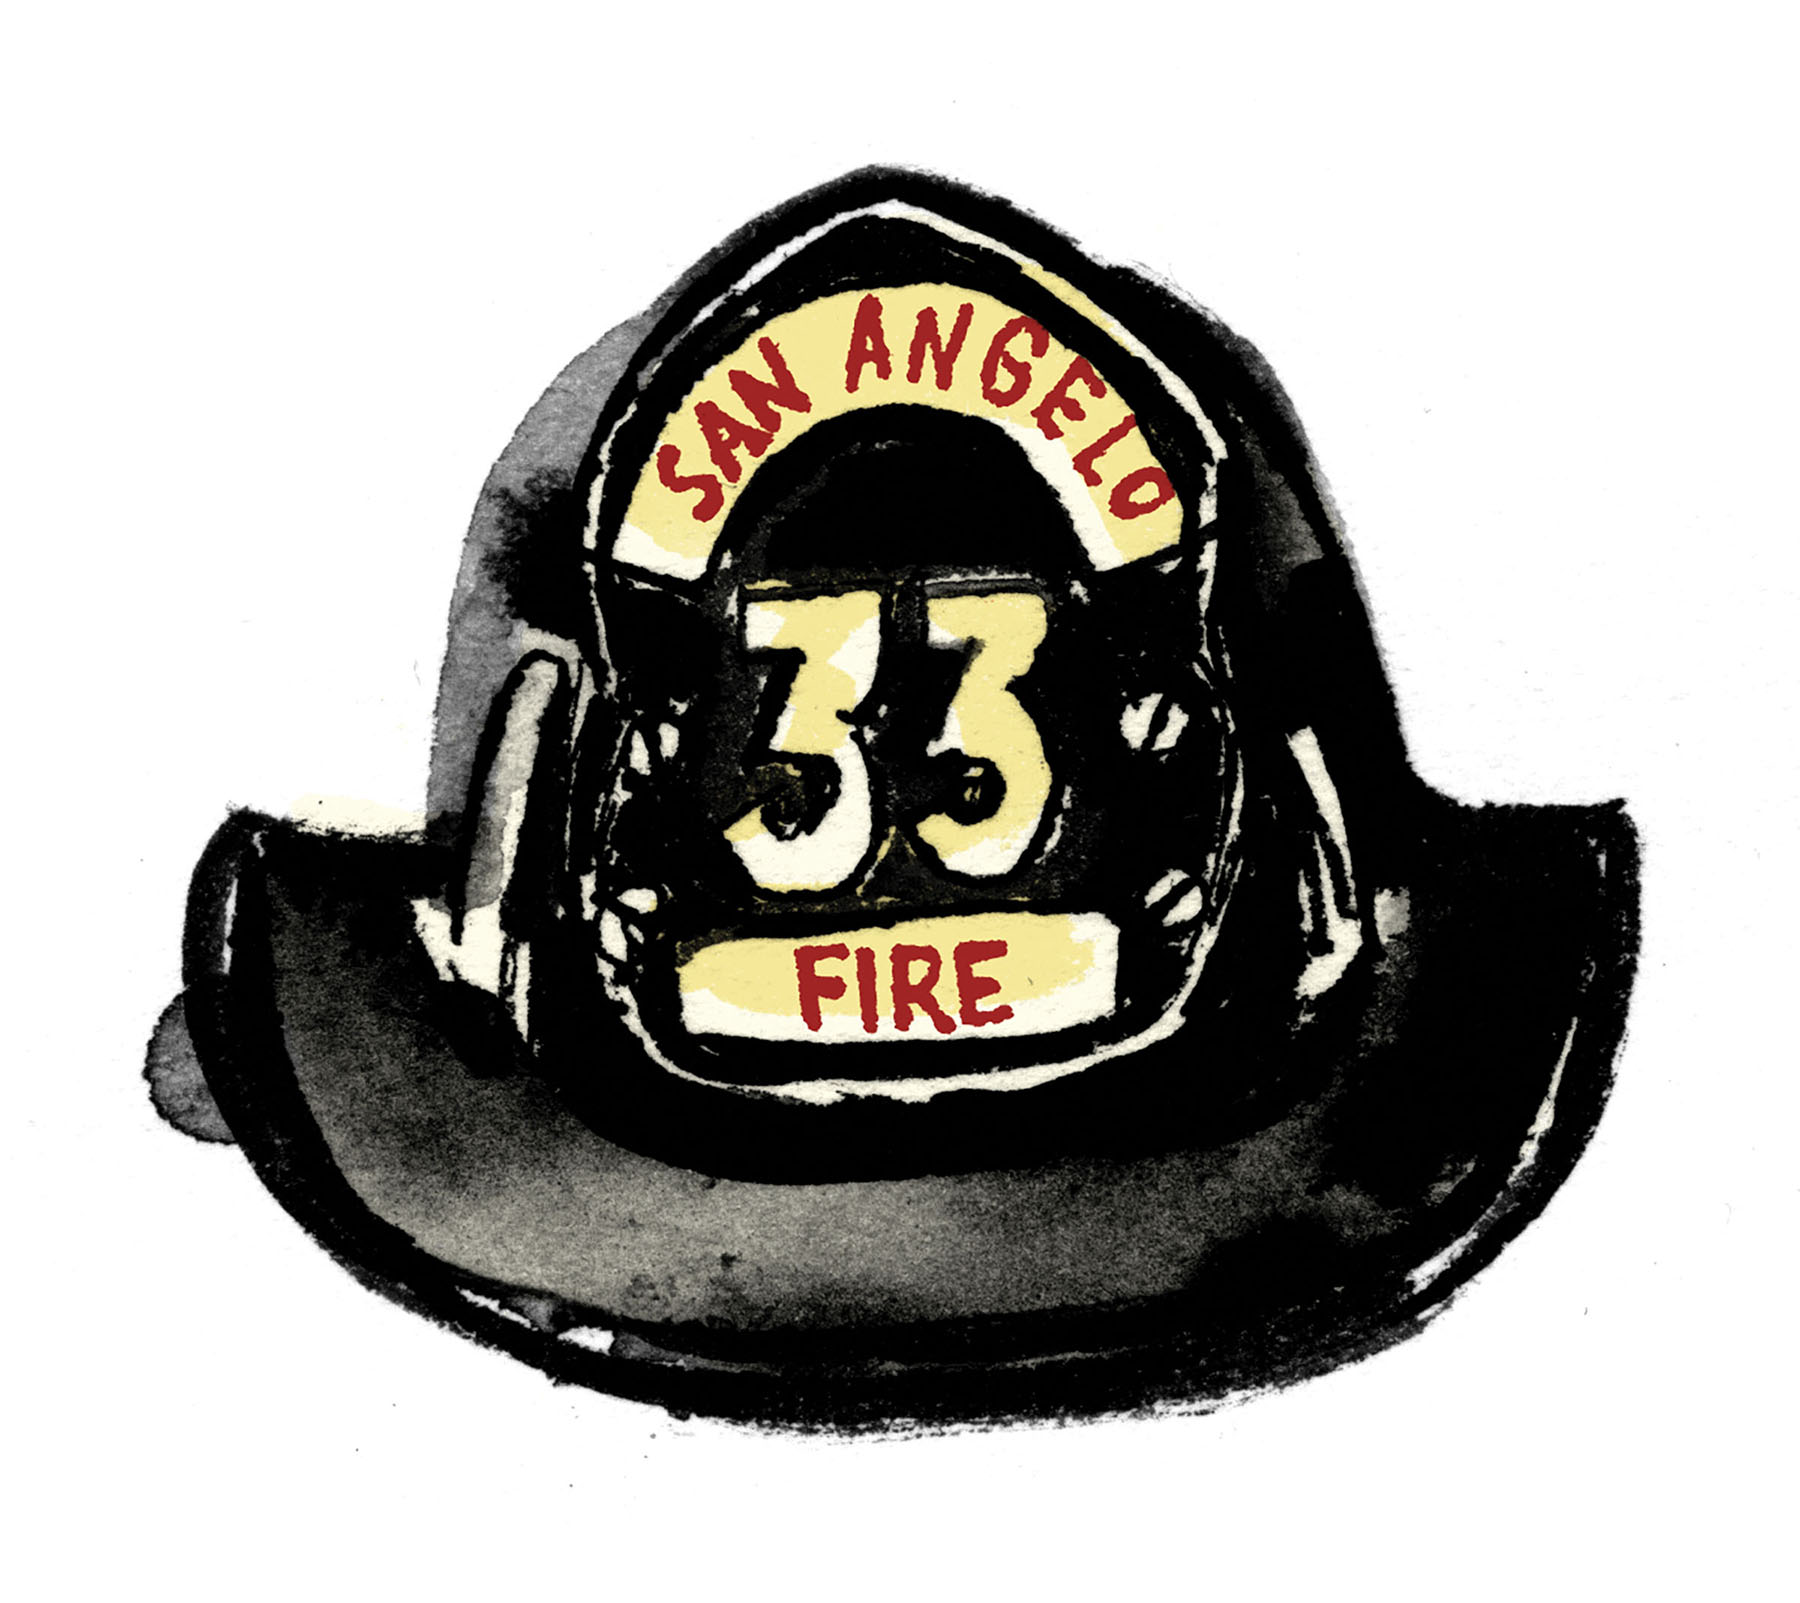 An illustration of a fire helmet with 'San Angelo Fire - 33' written on it